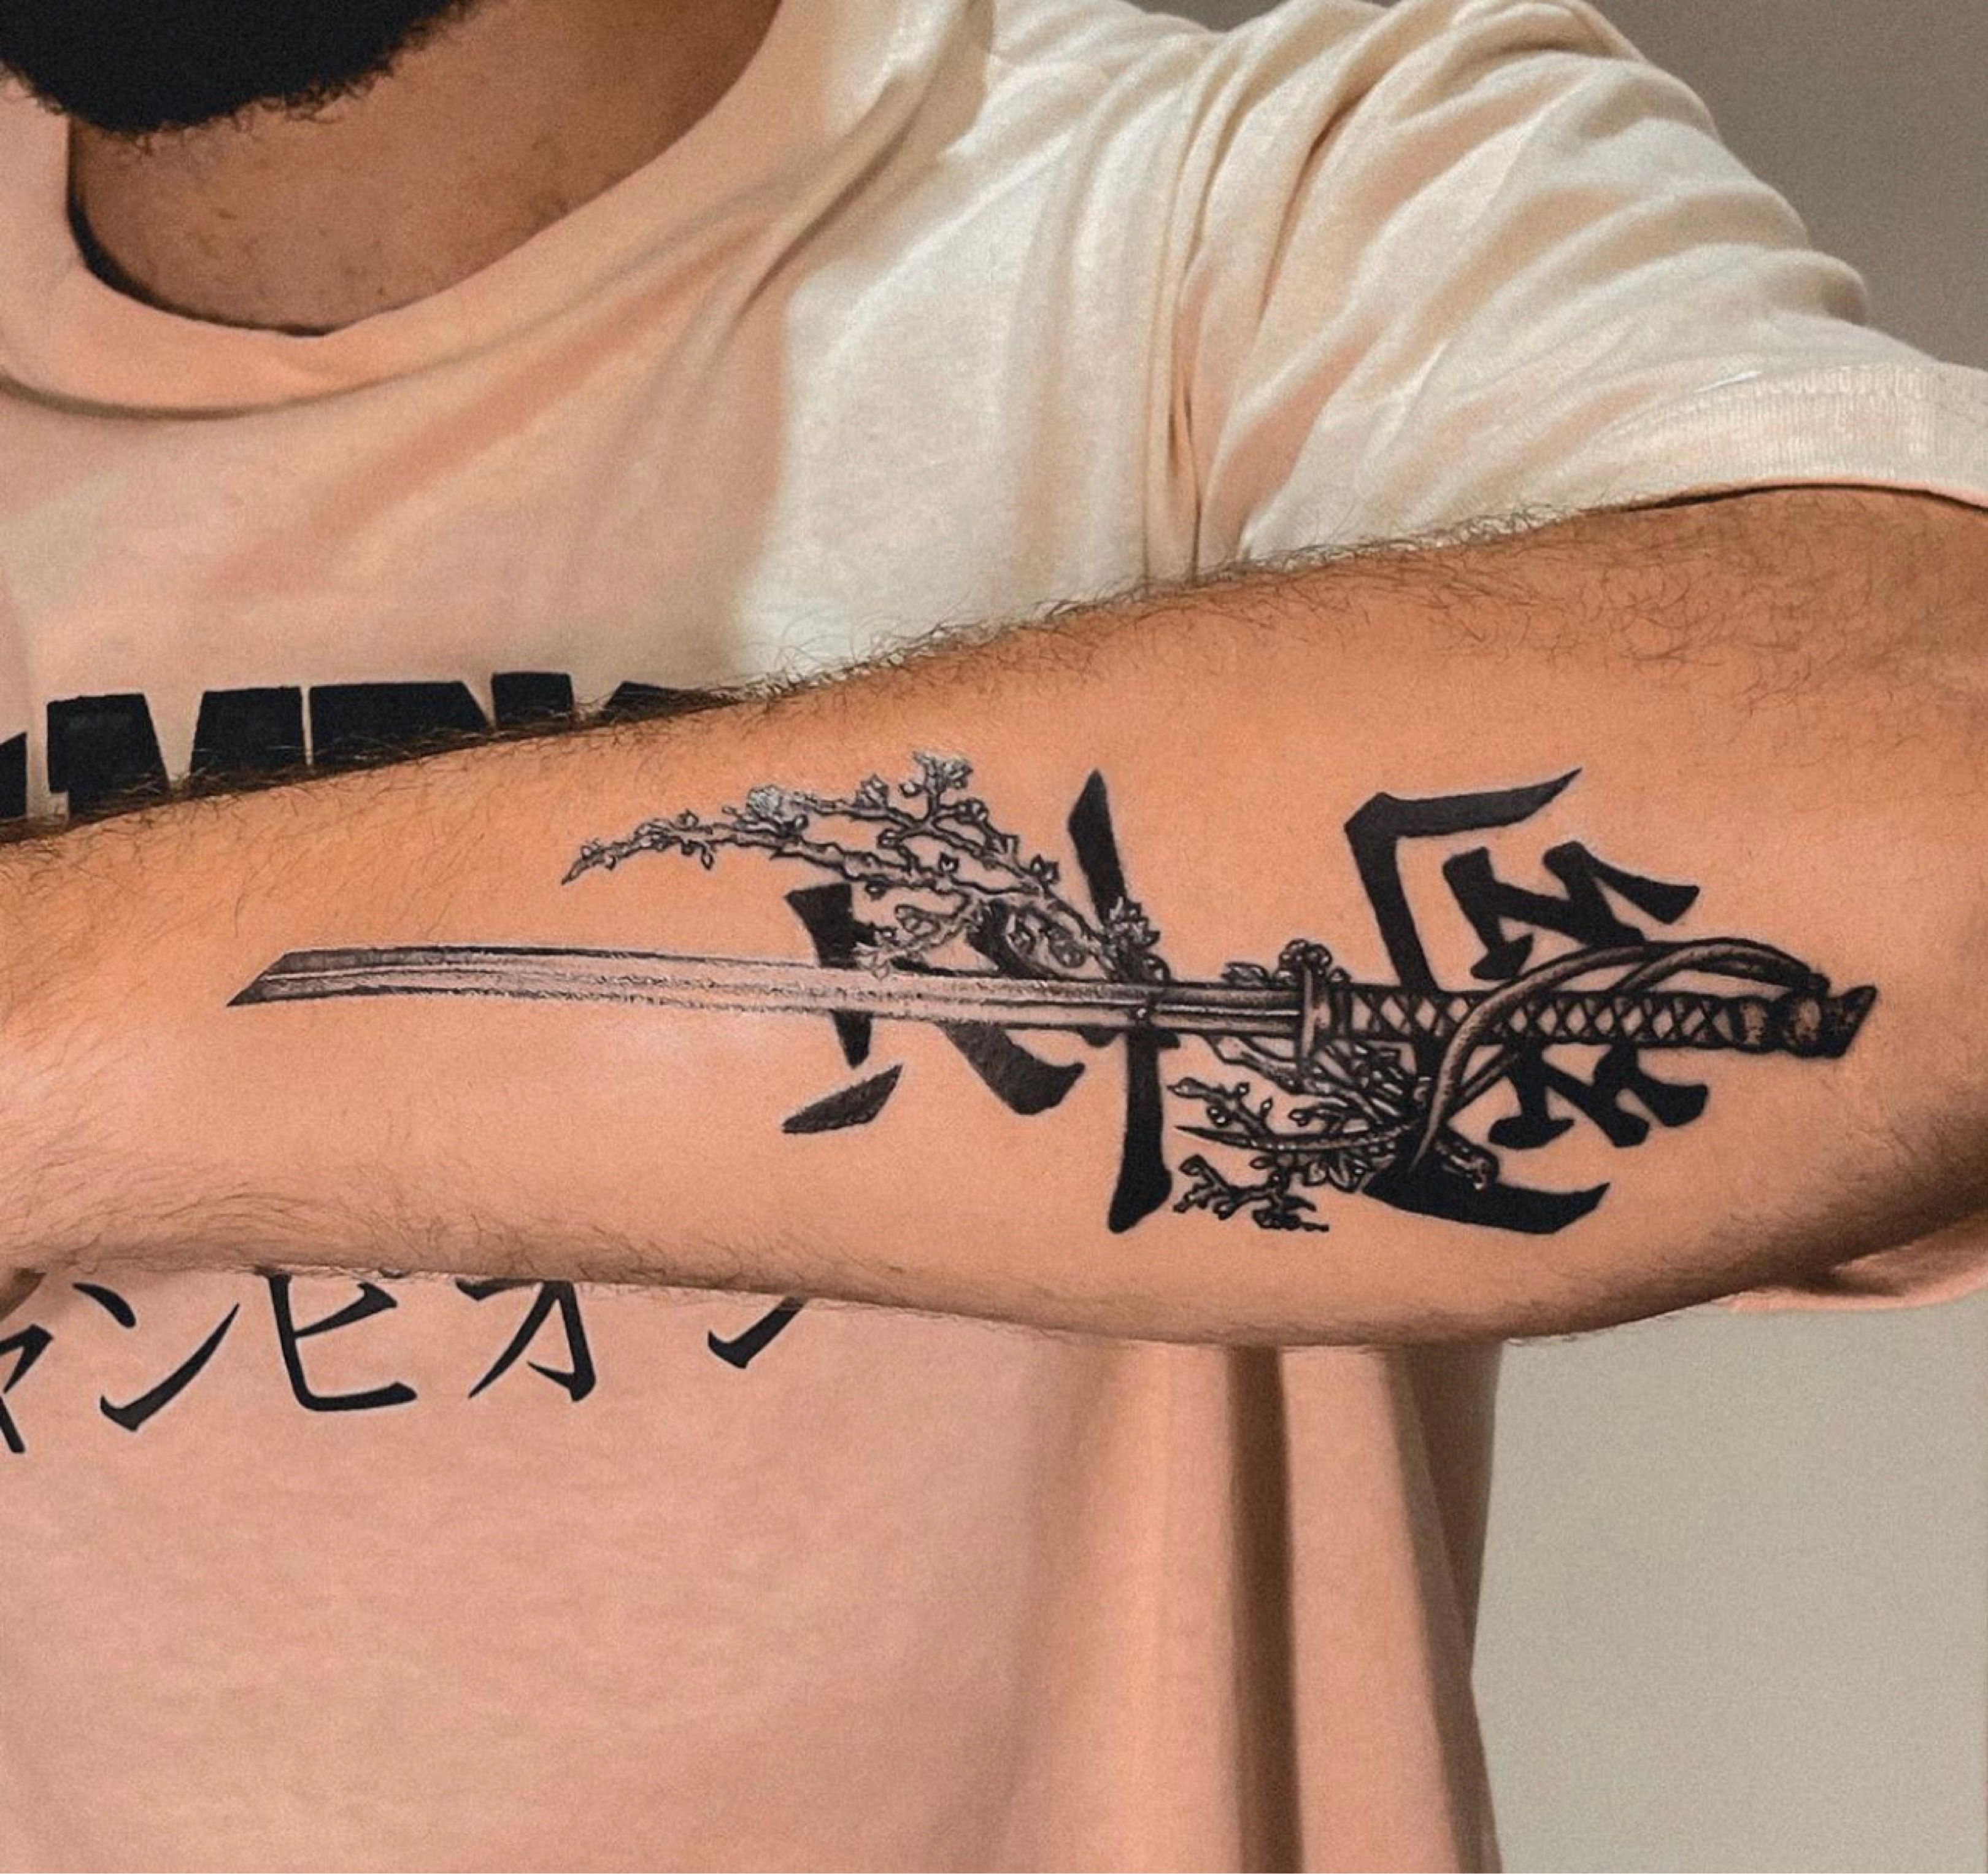 Arctic Ninja on Twitter Samurai Jack tattoo progress on Aku One more  appointment to finish it up httpstcoxjkCScHp3A  Twitter